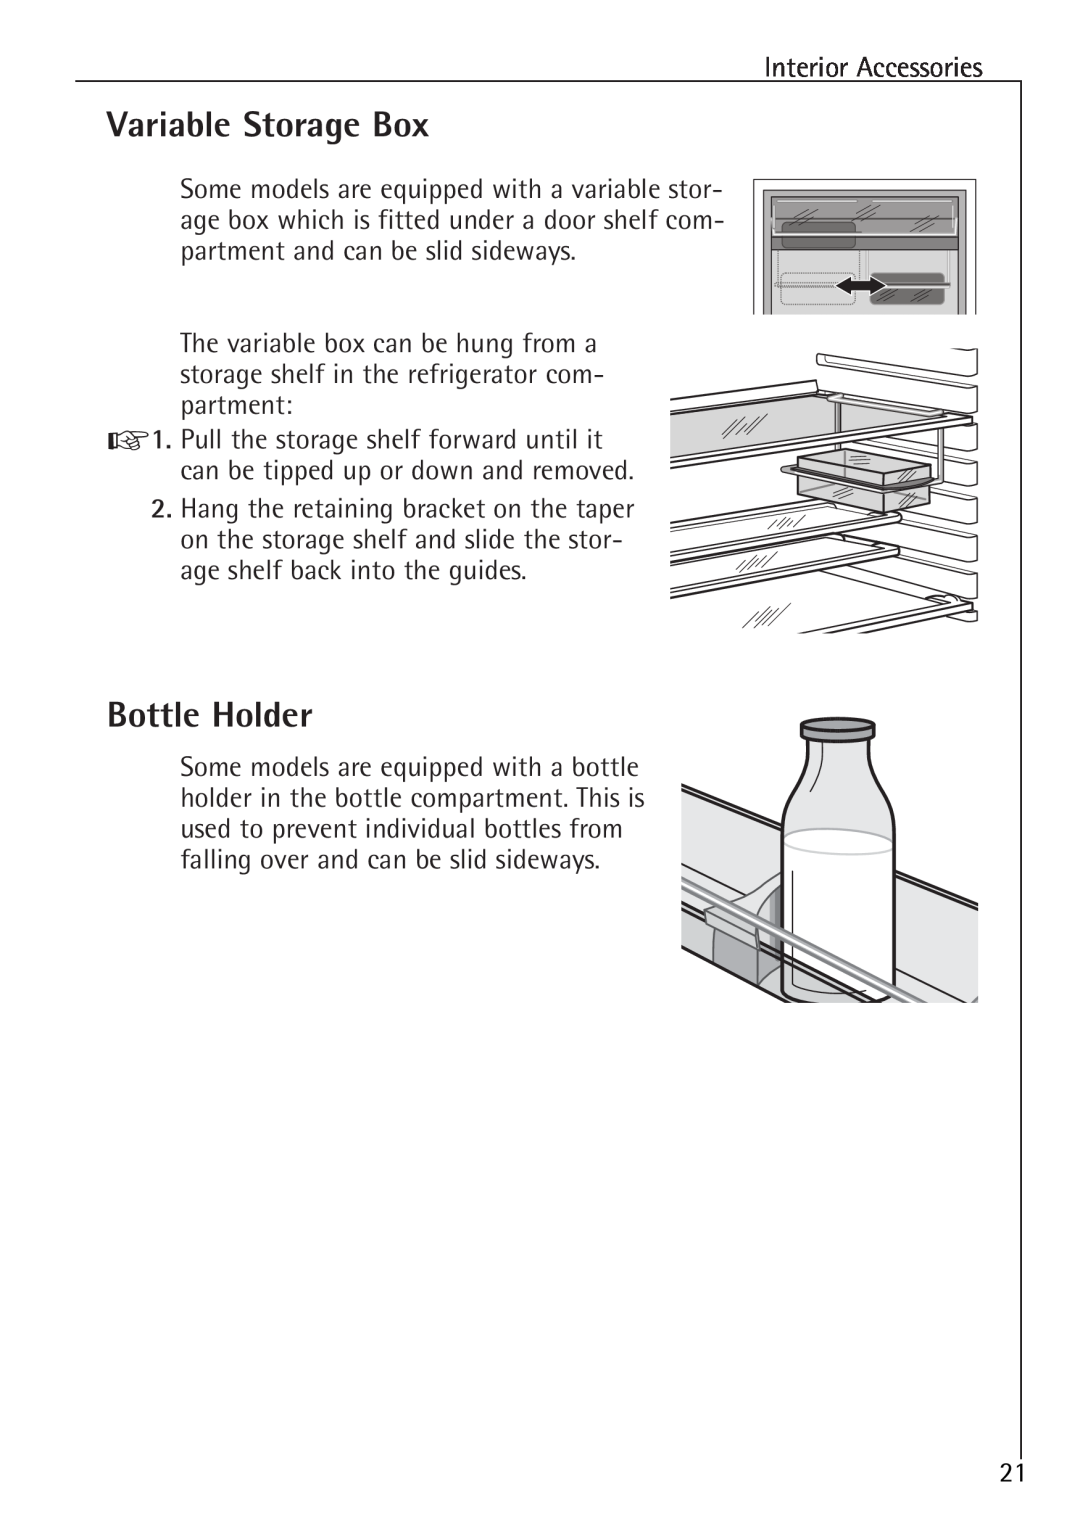 Electrolux U 86000-4 manual Variable Storage Box, Bottle Holder, Interior Accessories 